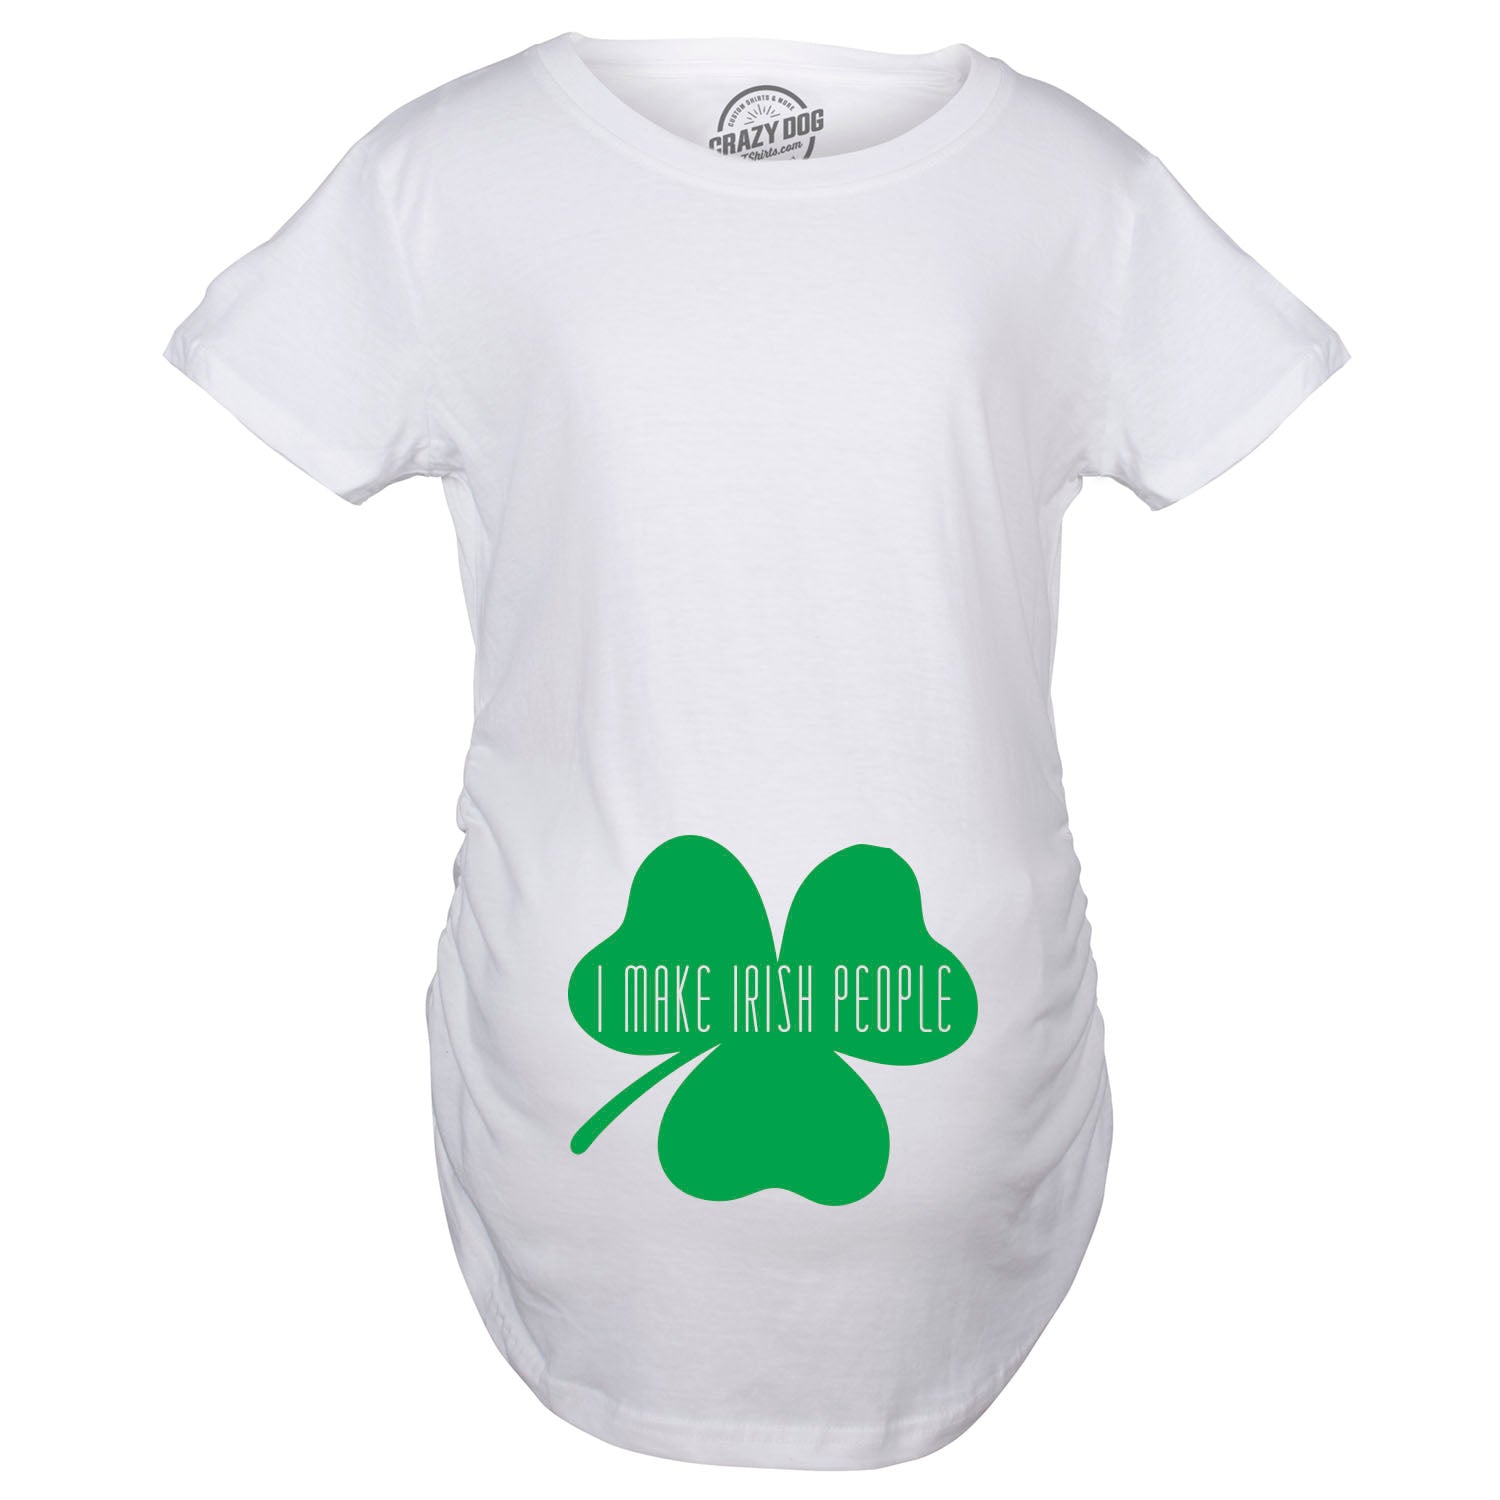 Funny White I Make Irish People Maternity T Shirt Nerdy Saint Patrick's Day Tee